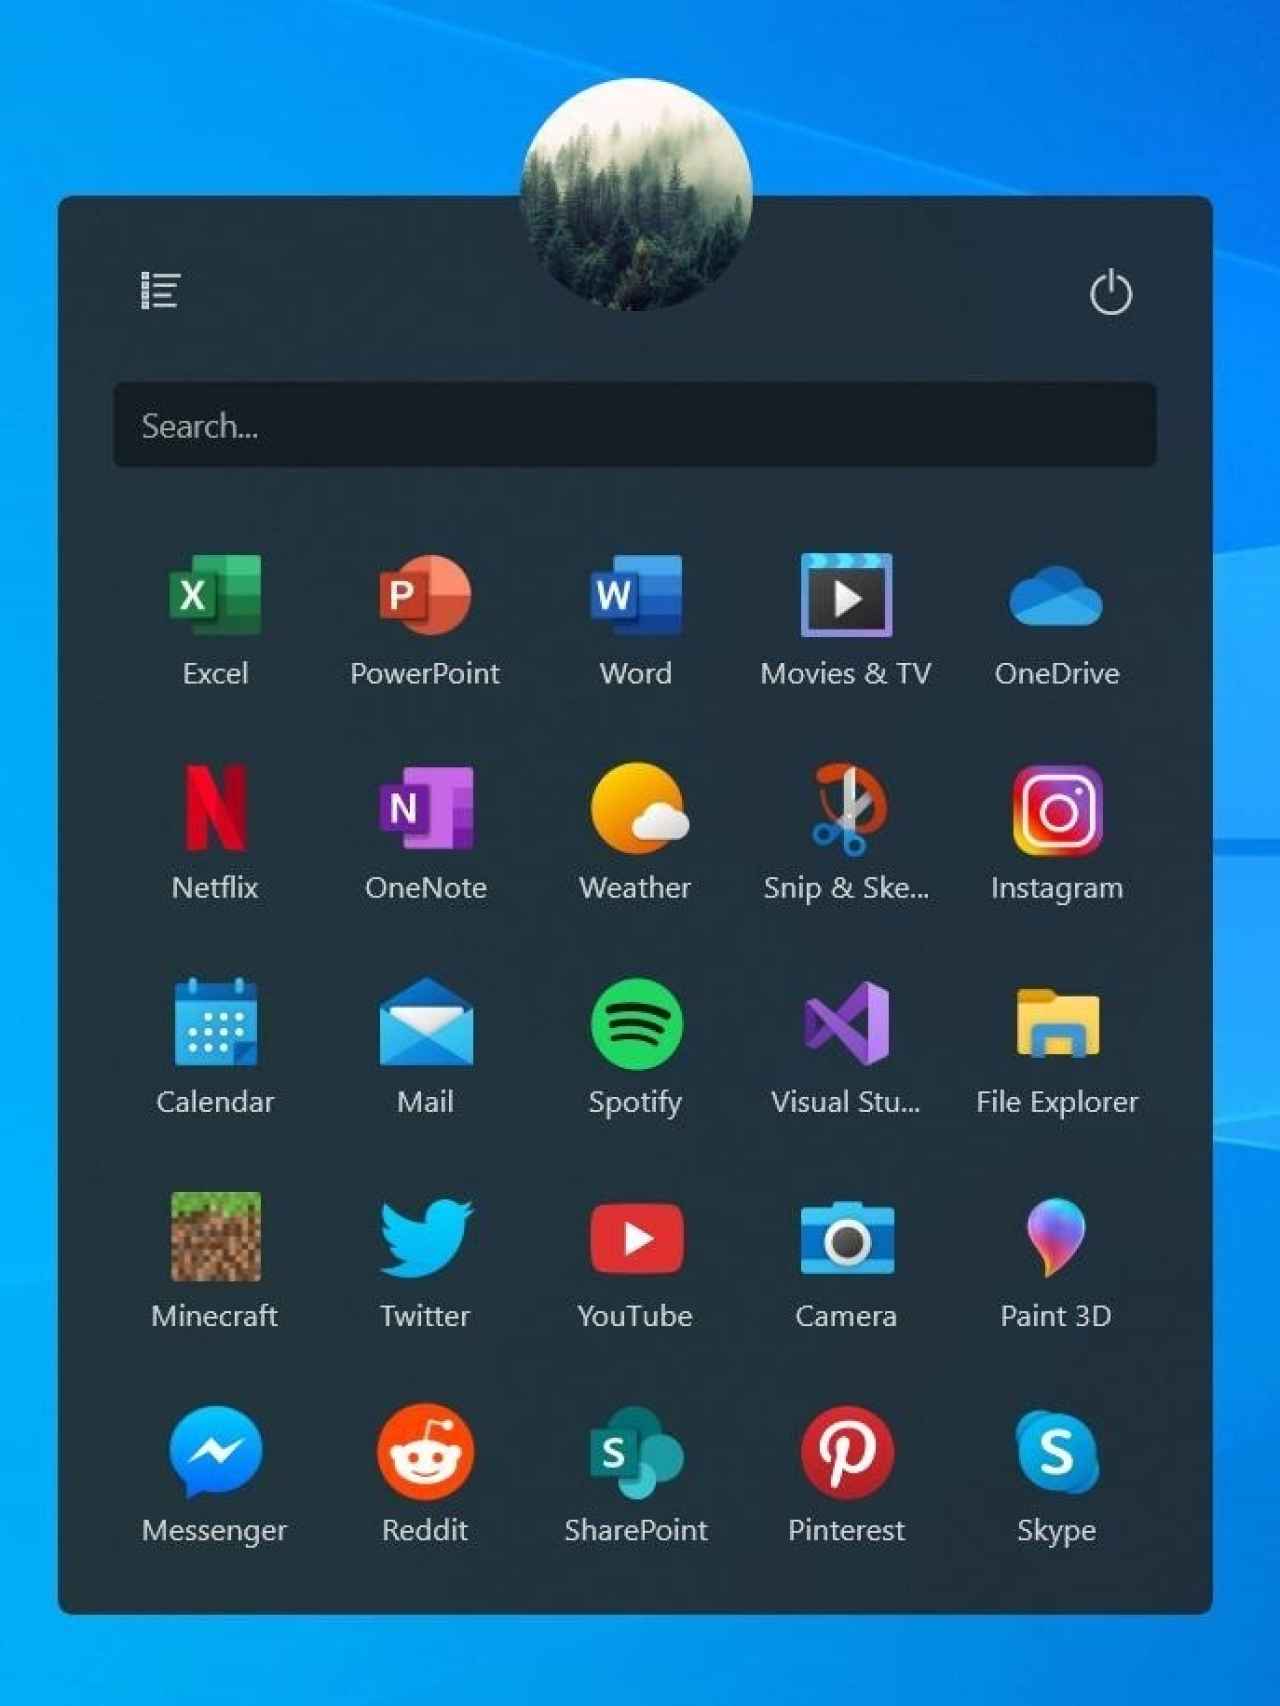 Iconos Windows 10